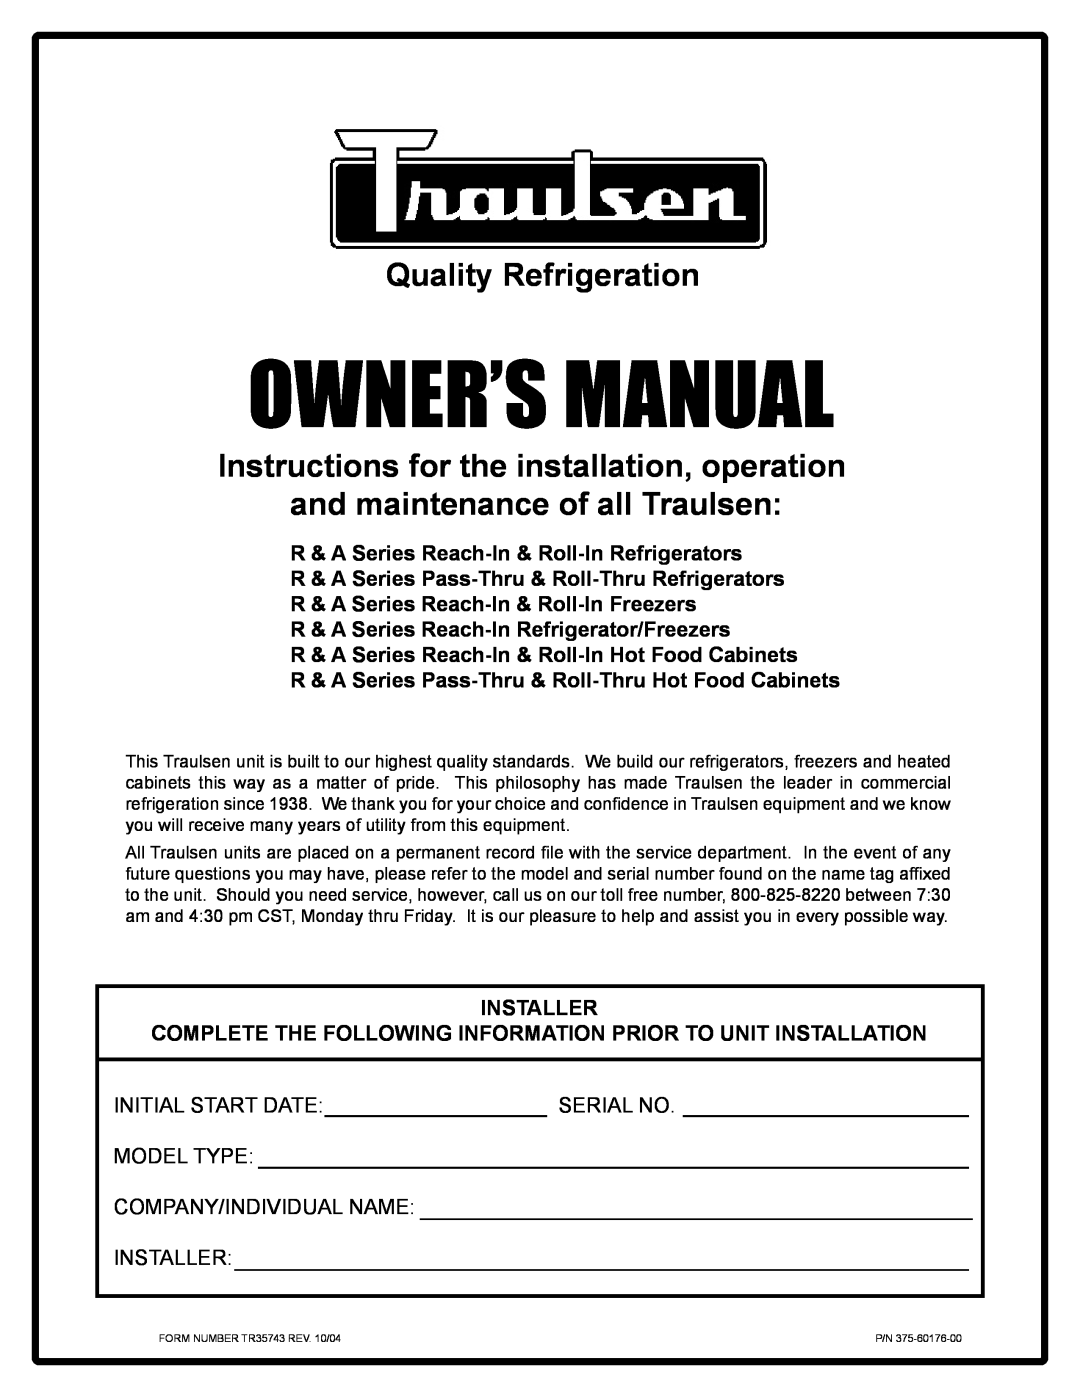 Traulsen owner manual R & A Series Reach-In & Roll-In Refrigerators, R & A Series Pass-Thru & Roll-Thru Refrigerators 